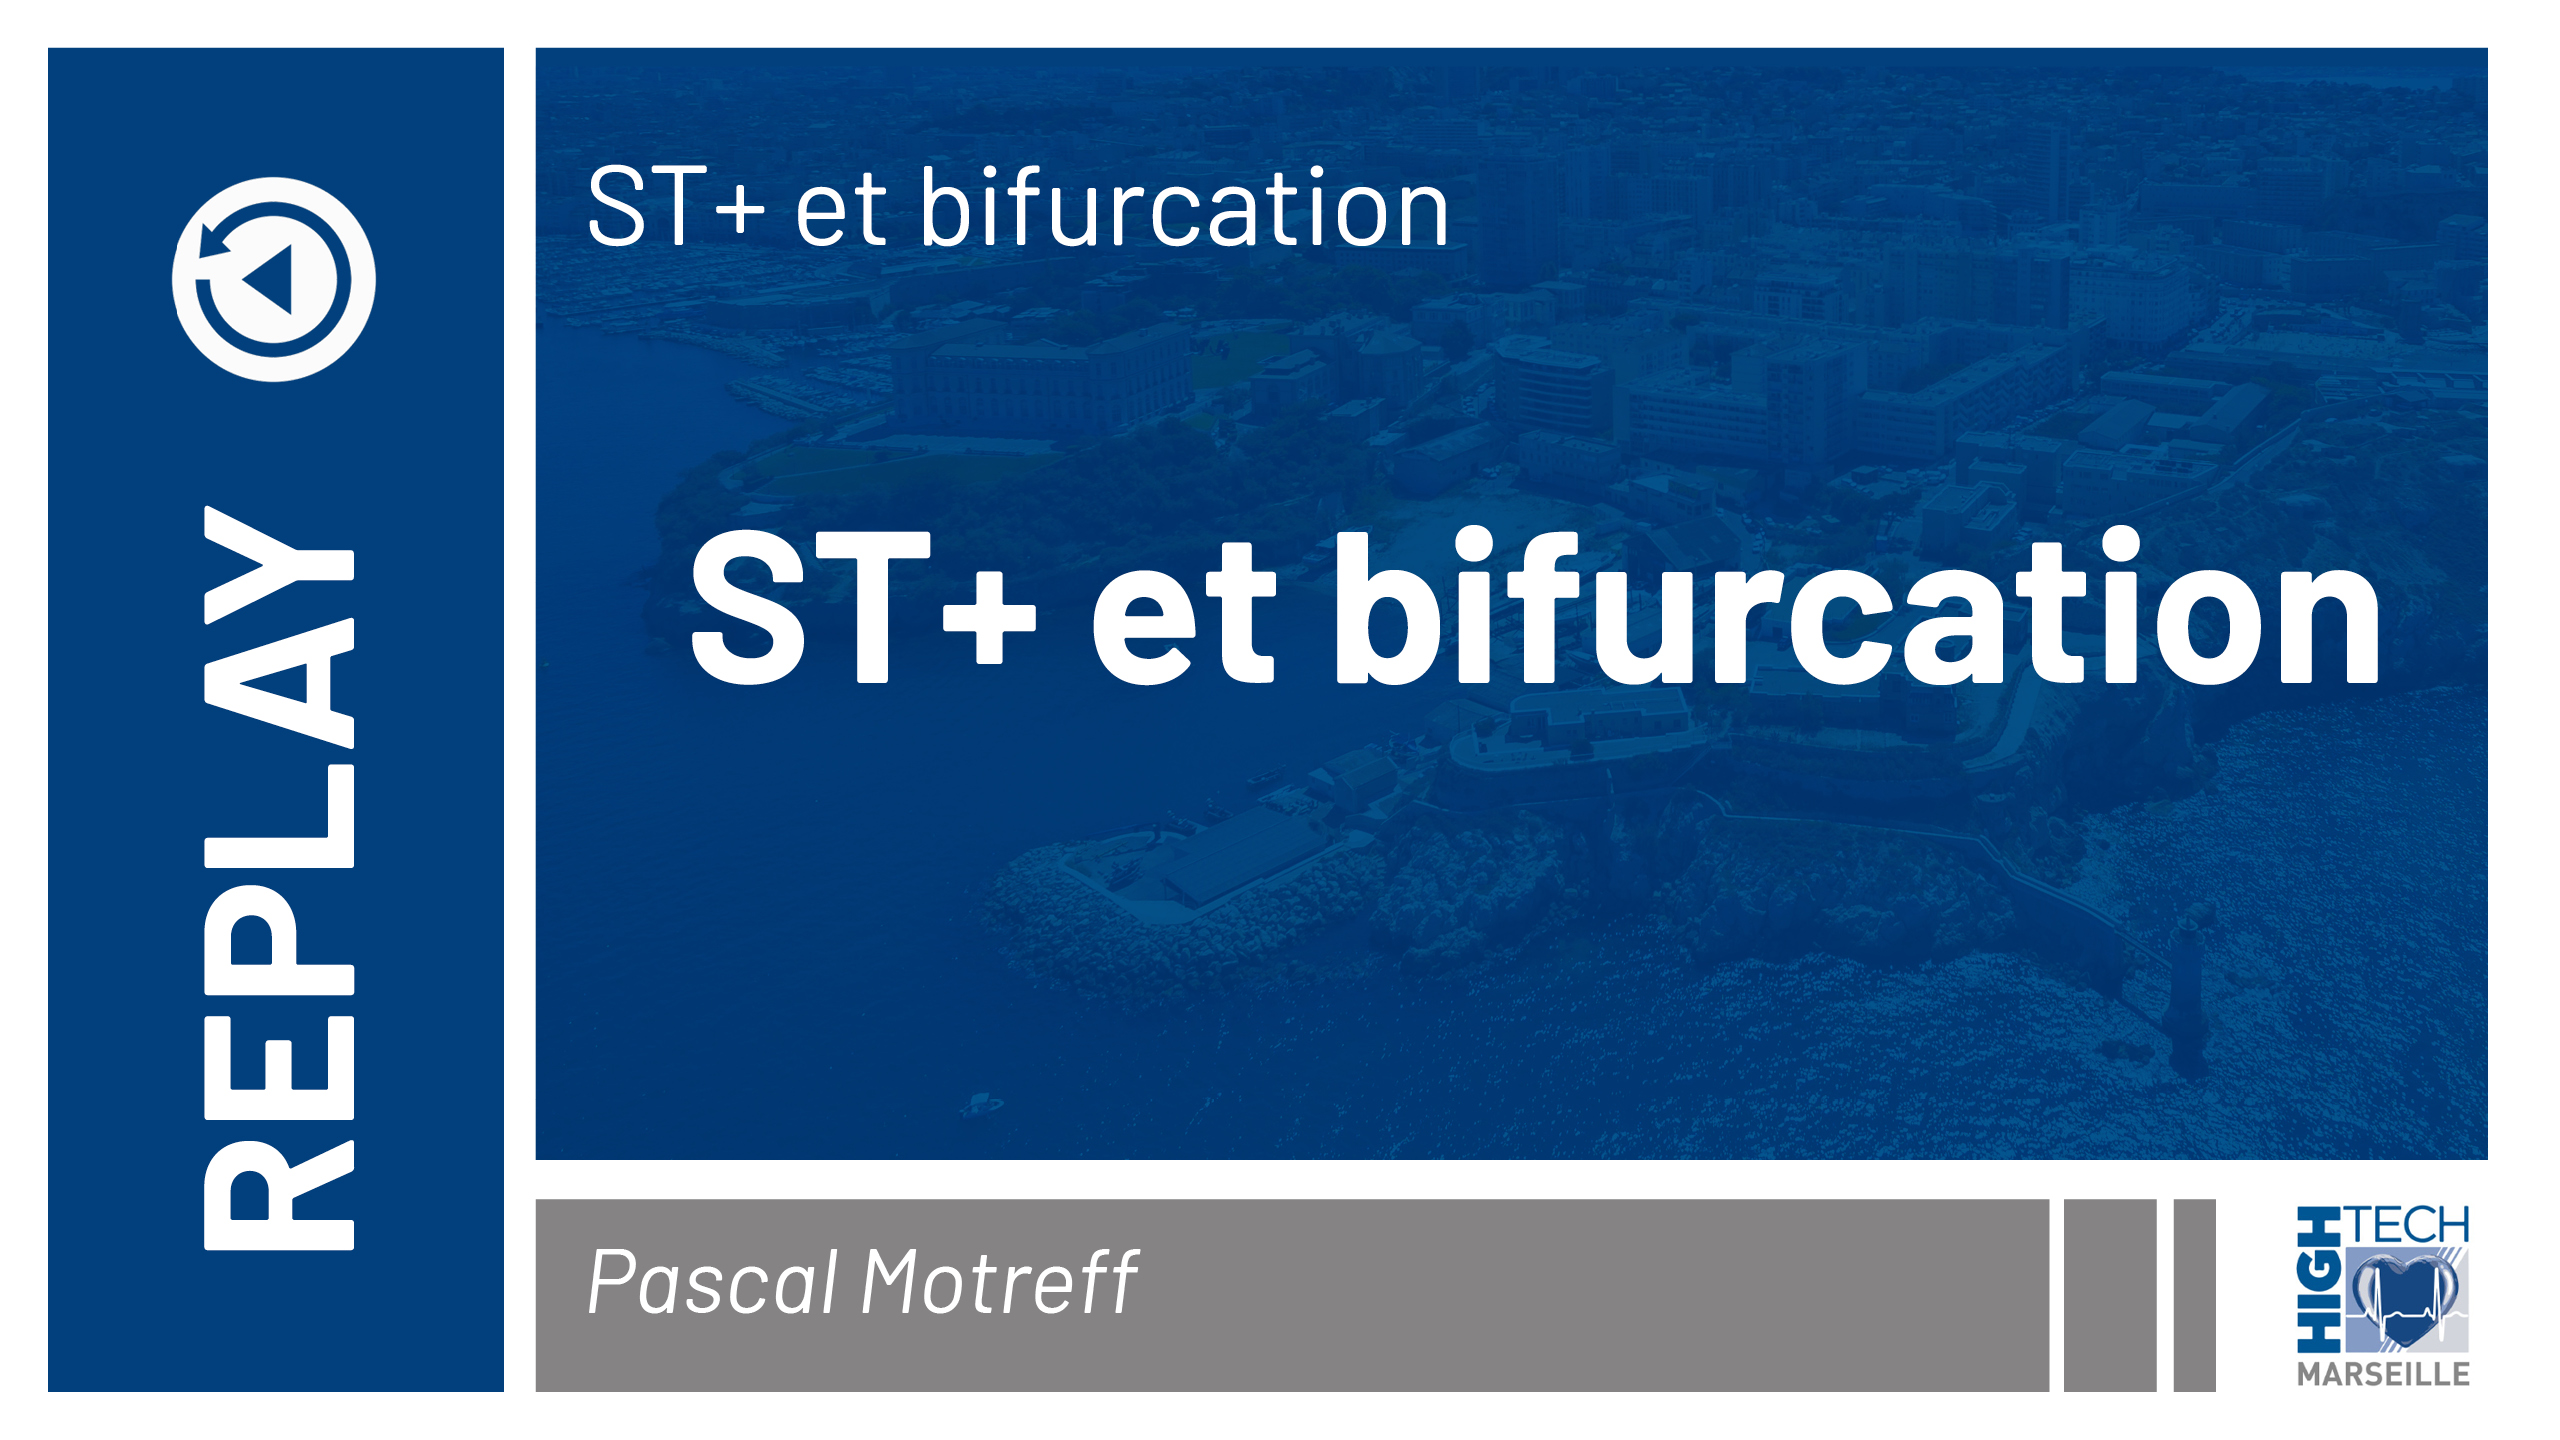 ST+ et bifurcation – Pascal Motreff